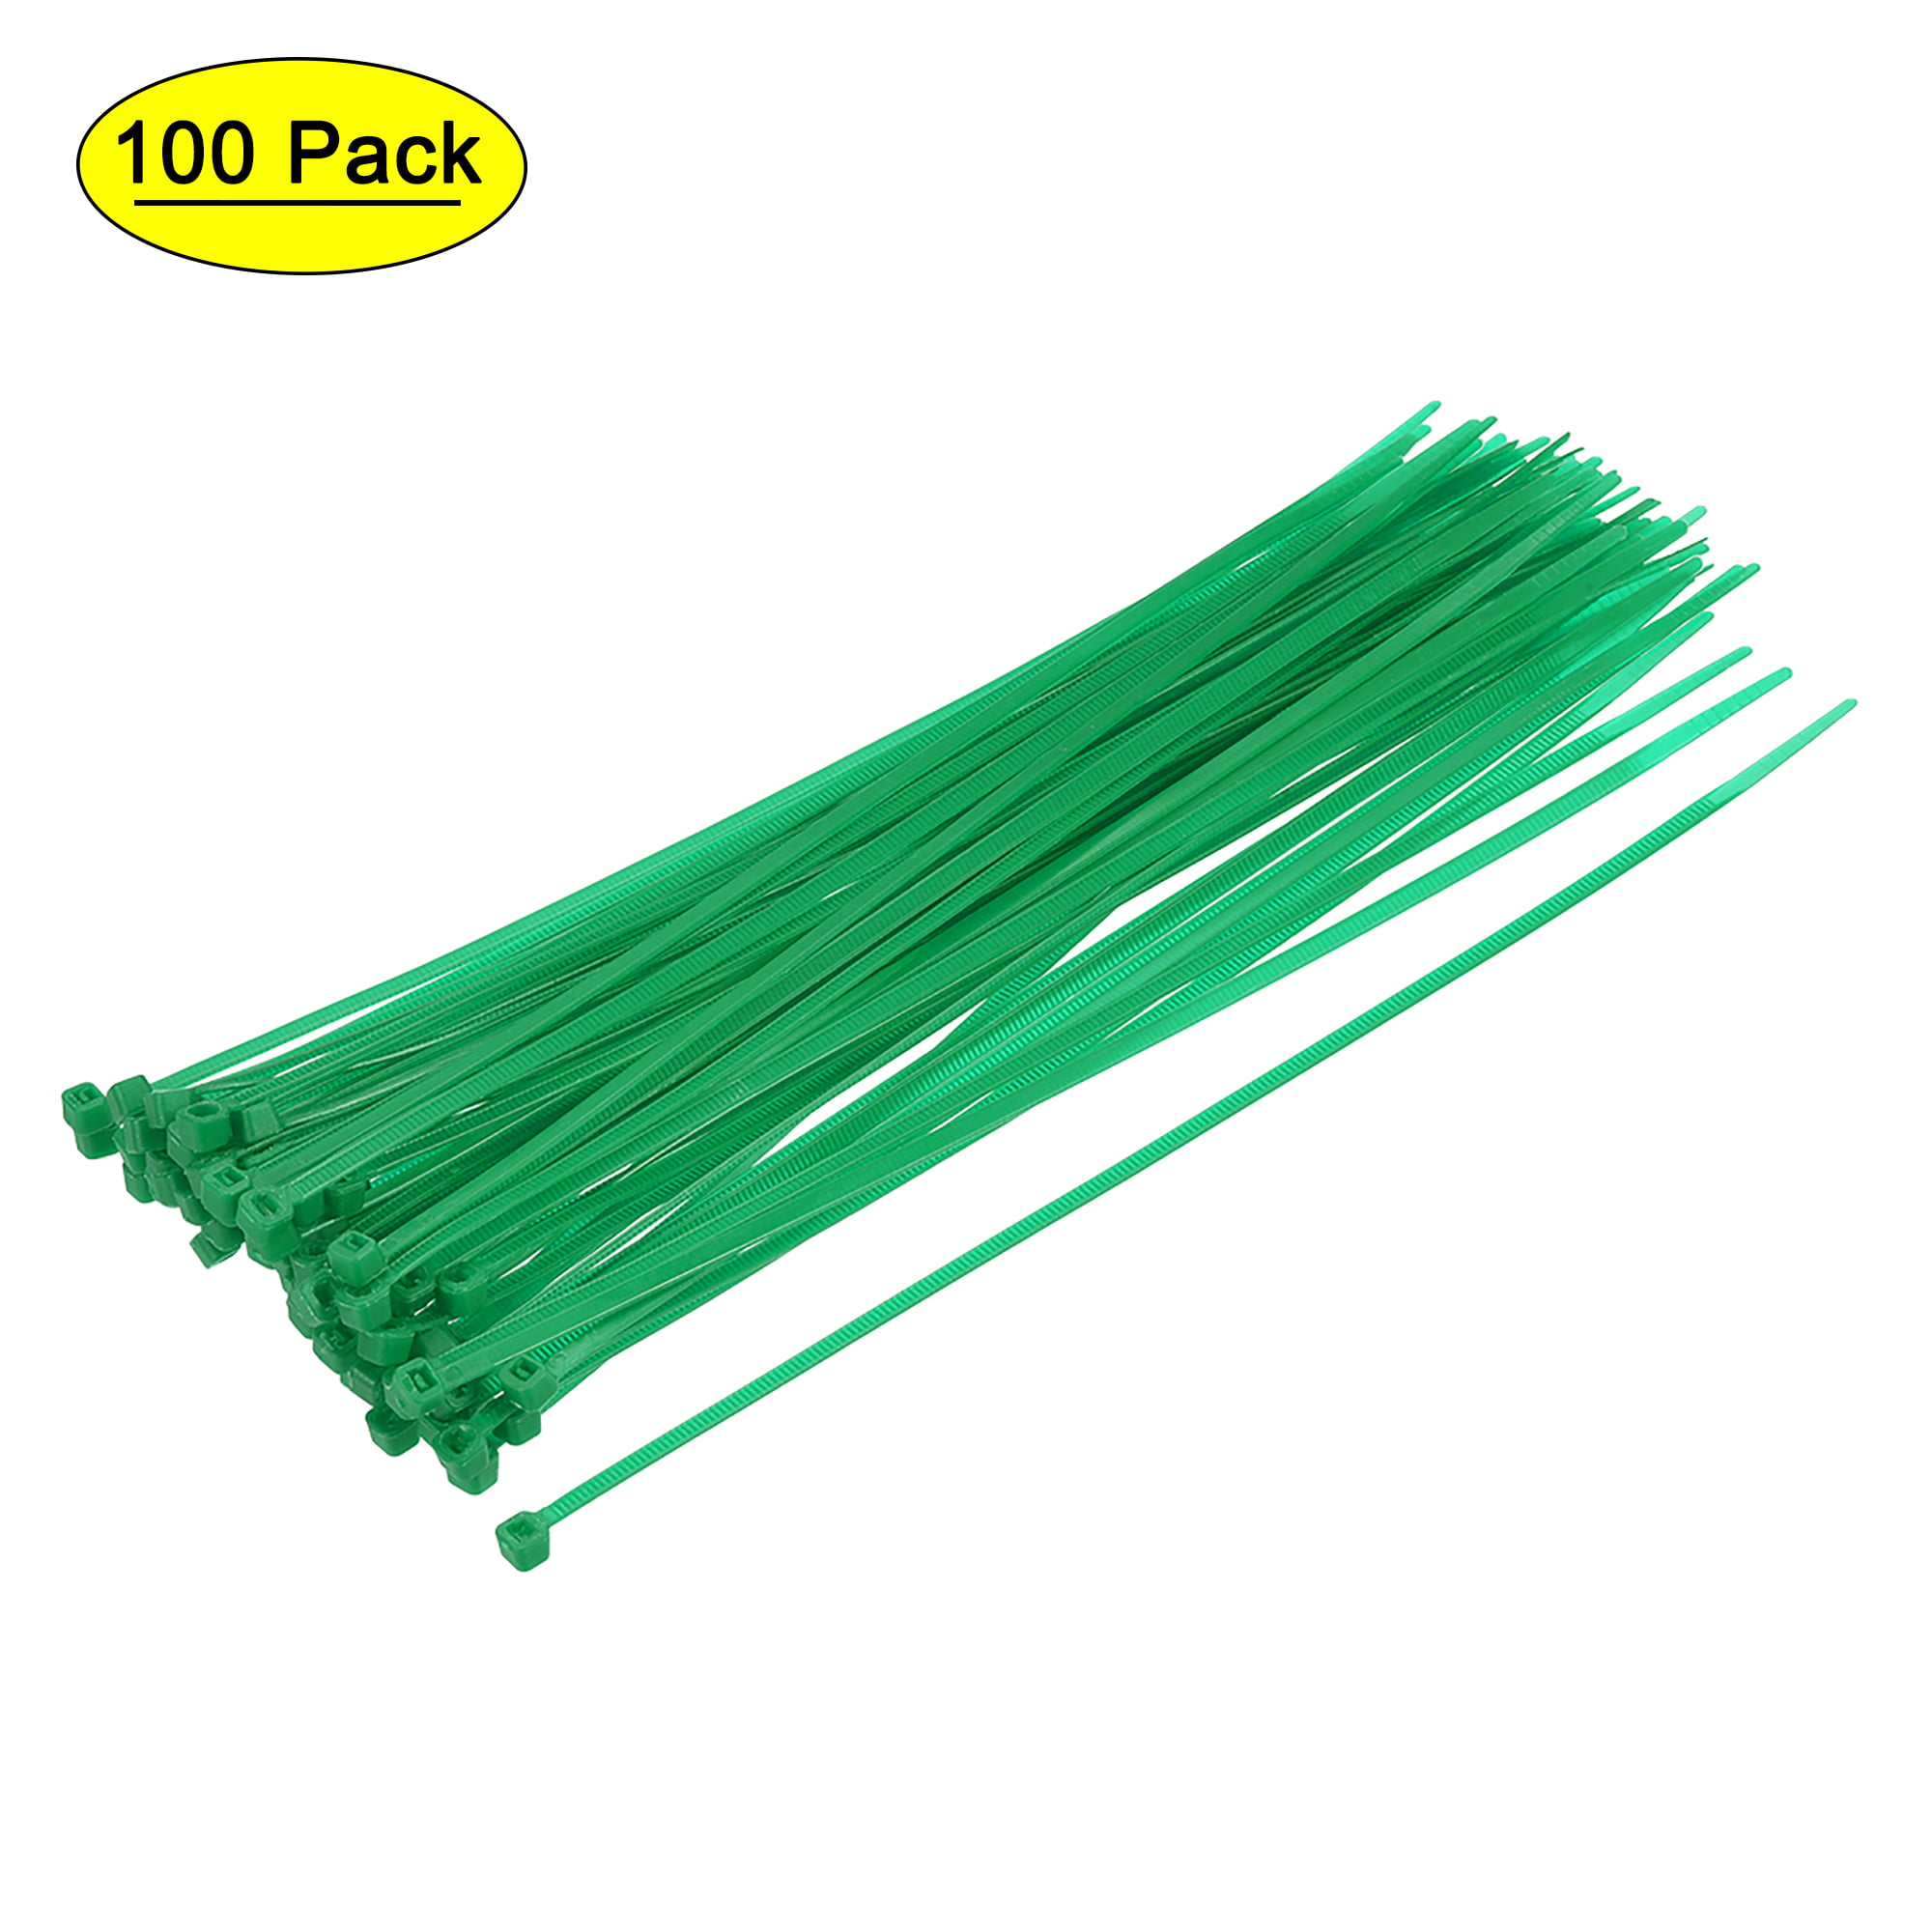 BUY 3 GET 1 FREE 250 Cable Ties Home Garden Plant Tie Nylon Zip Wraps Mix Sizes